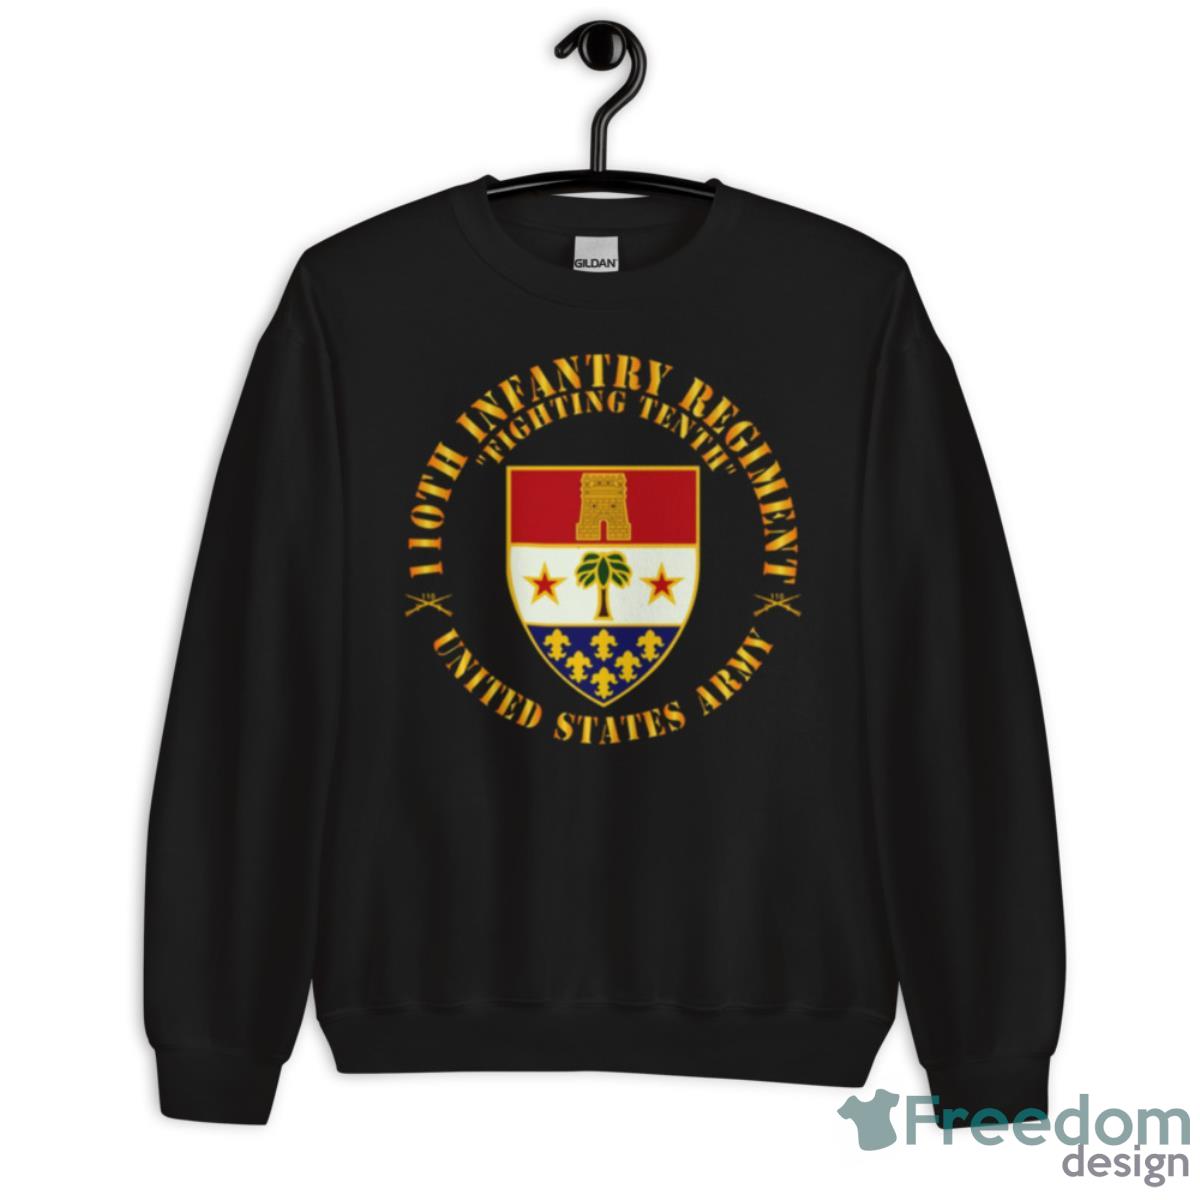 110th Infantry Regiment Shirt